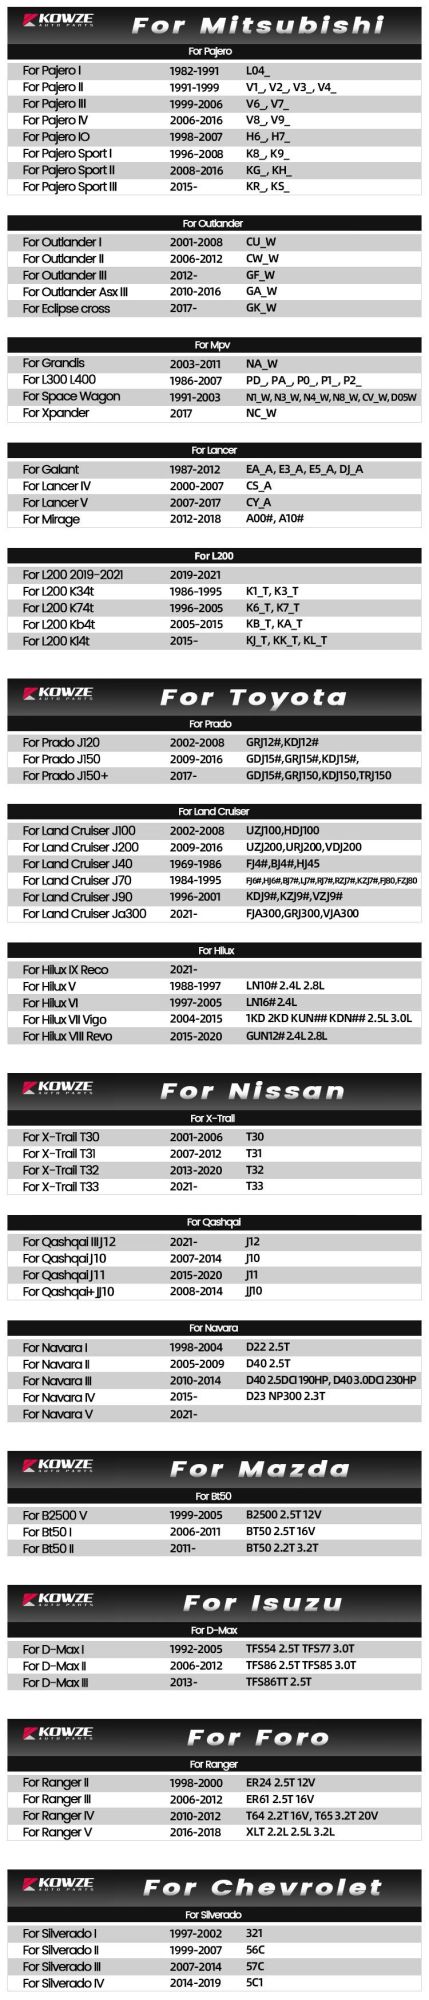 Kowze Auto Parts Suspensions Spare Part Crossmember for Mitsubishi L200 Pajero MPV Nissan Toyota Ford Isuzu Mazda Chevrolet